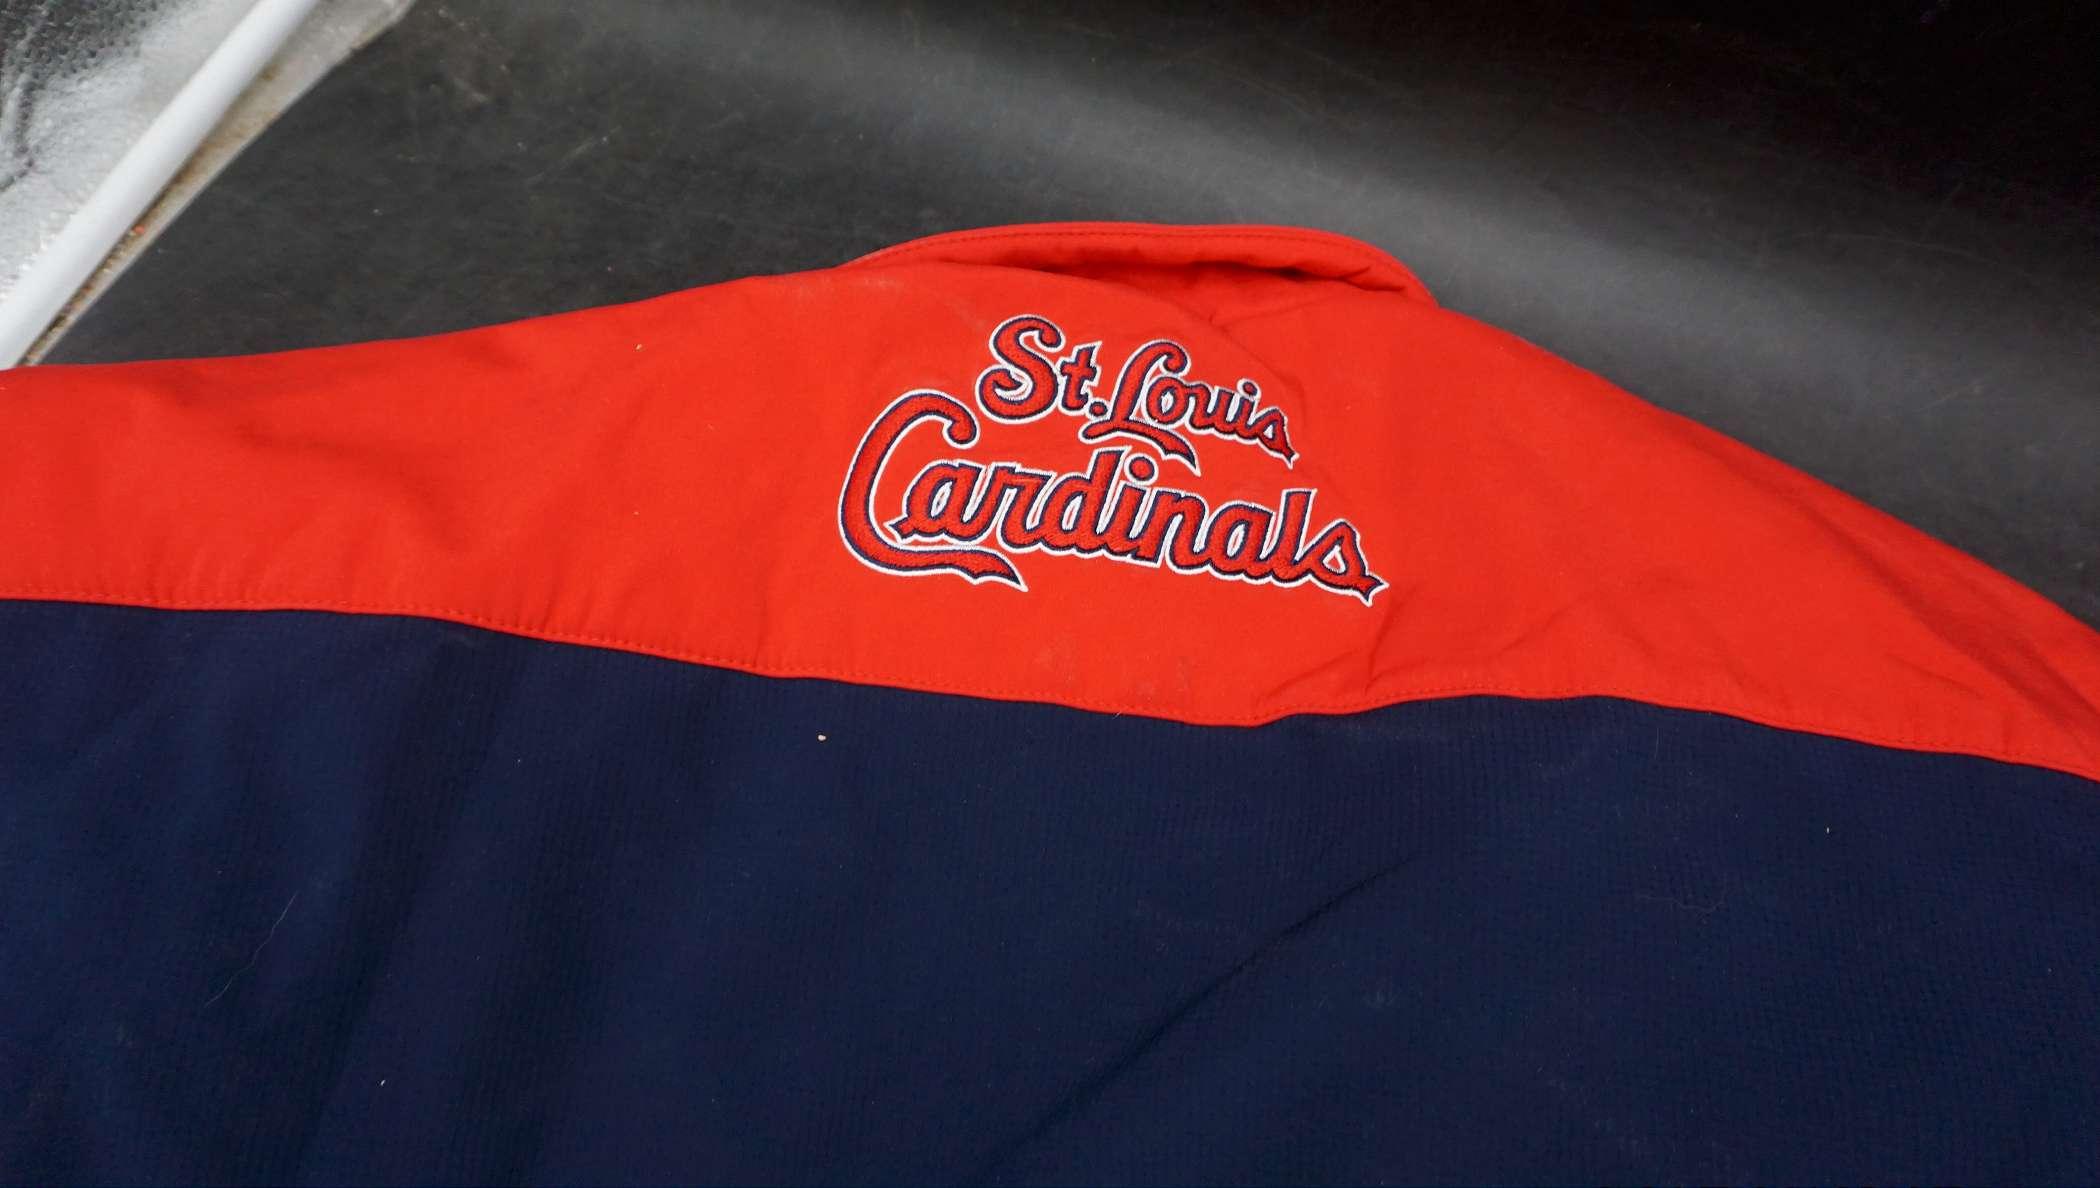 Mlb St. Louis Cardinals Jacket (Size Xxl)